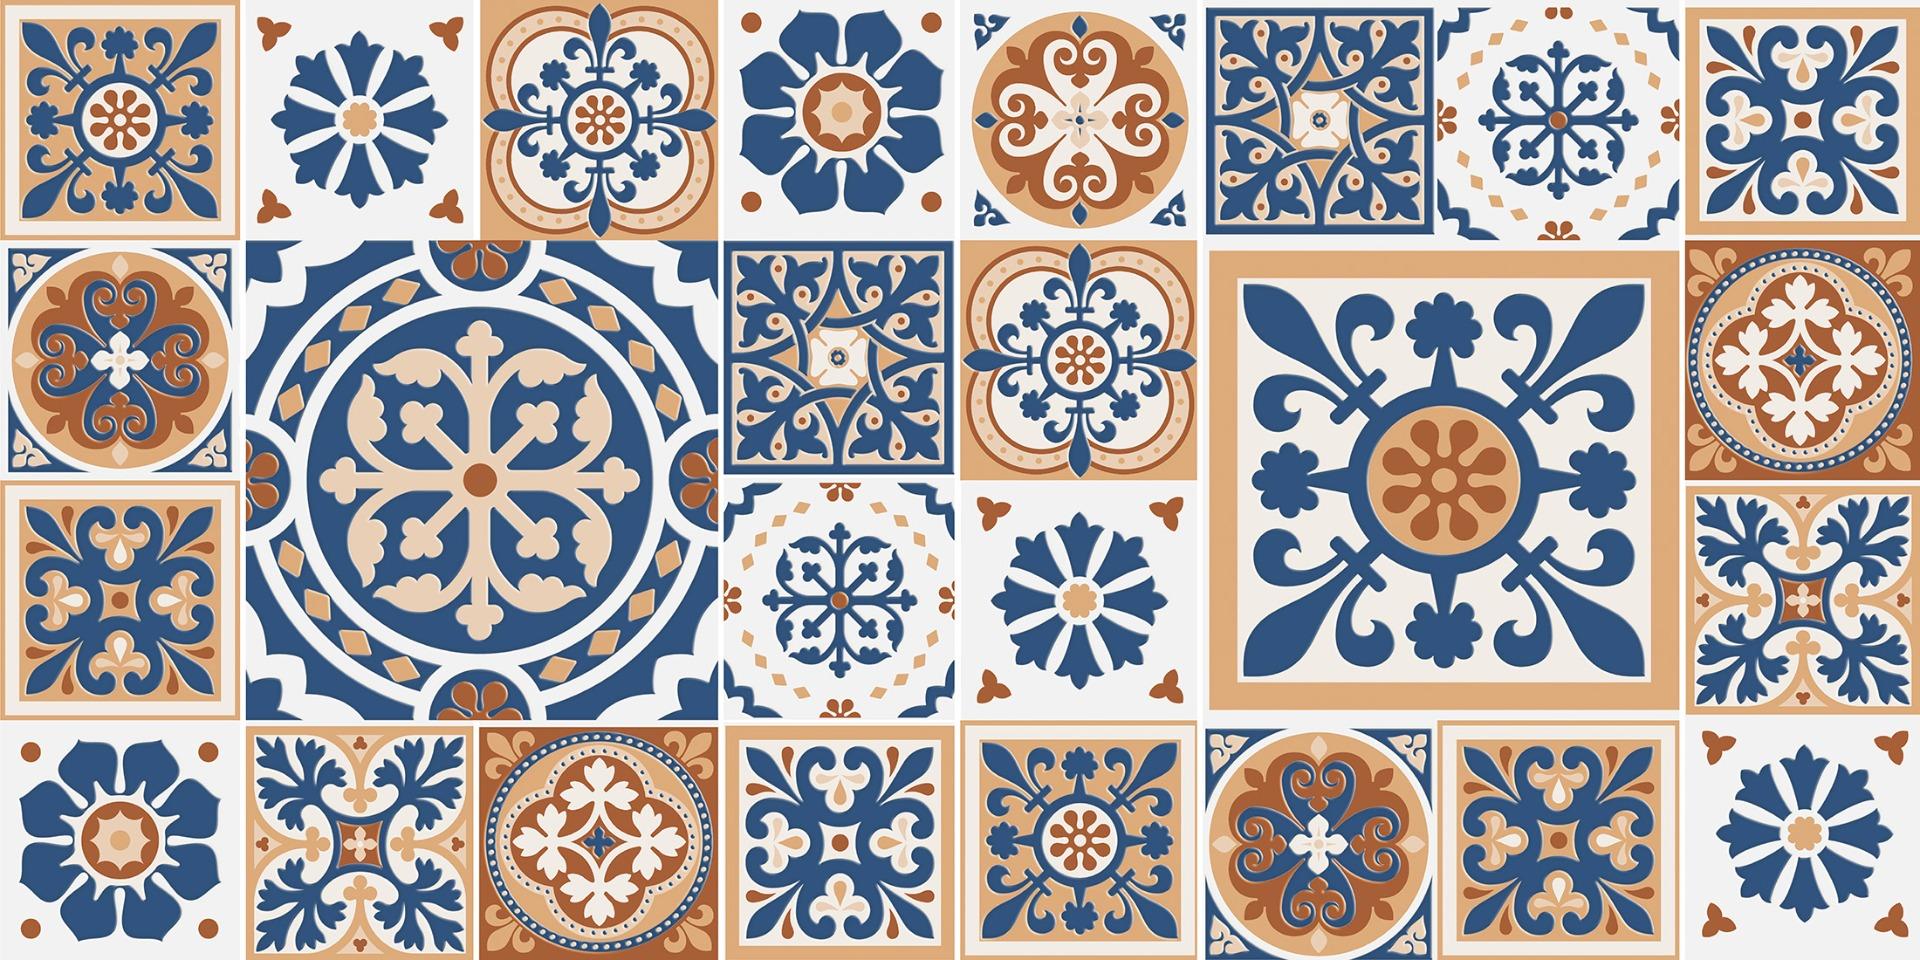 Blue Tiles for Bathroom Tiles, Living Room Tiles, Accent Tiles, Hospital Tiles, High Traffic Tiles, Bar/Restaurant, Commercial/Office, School & Collages